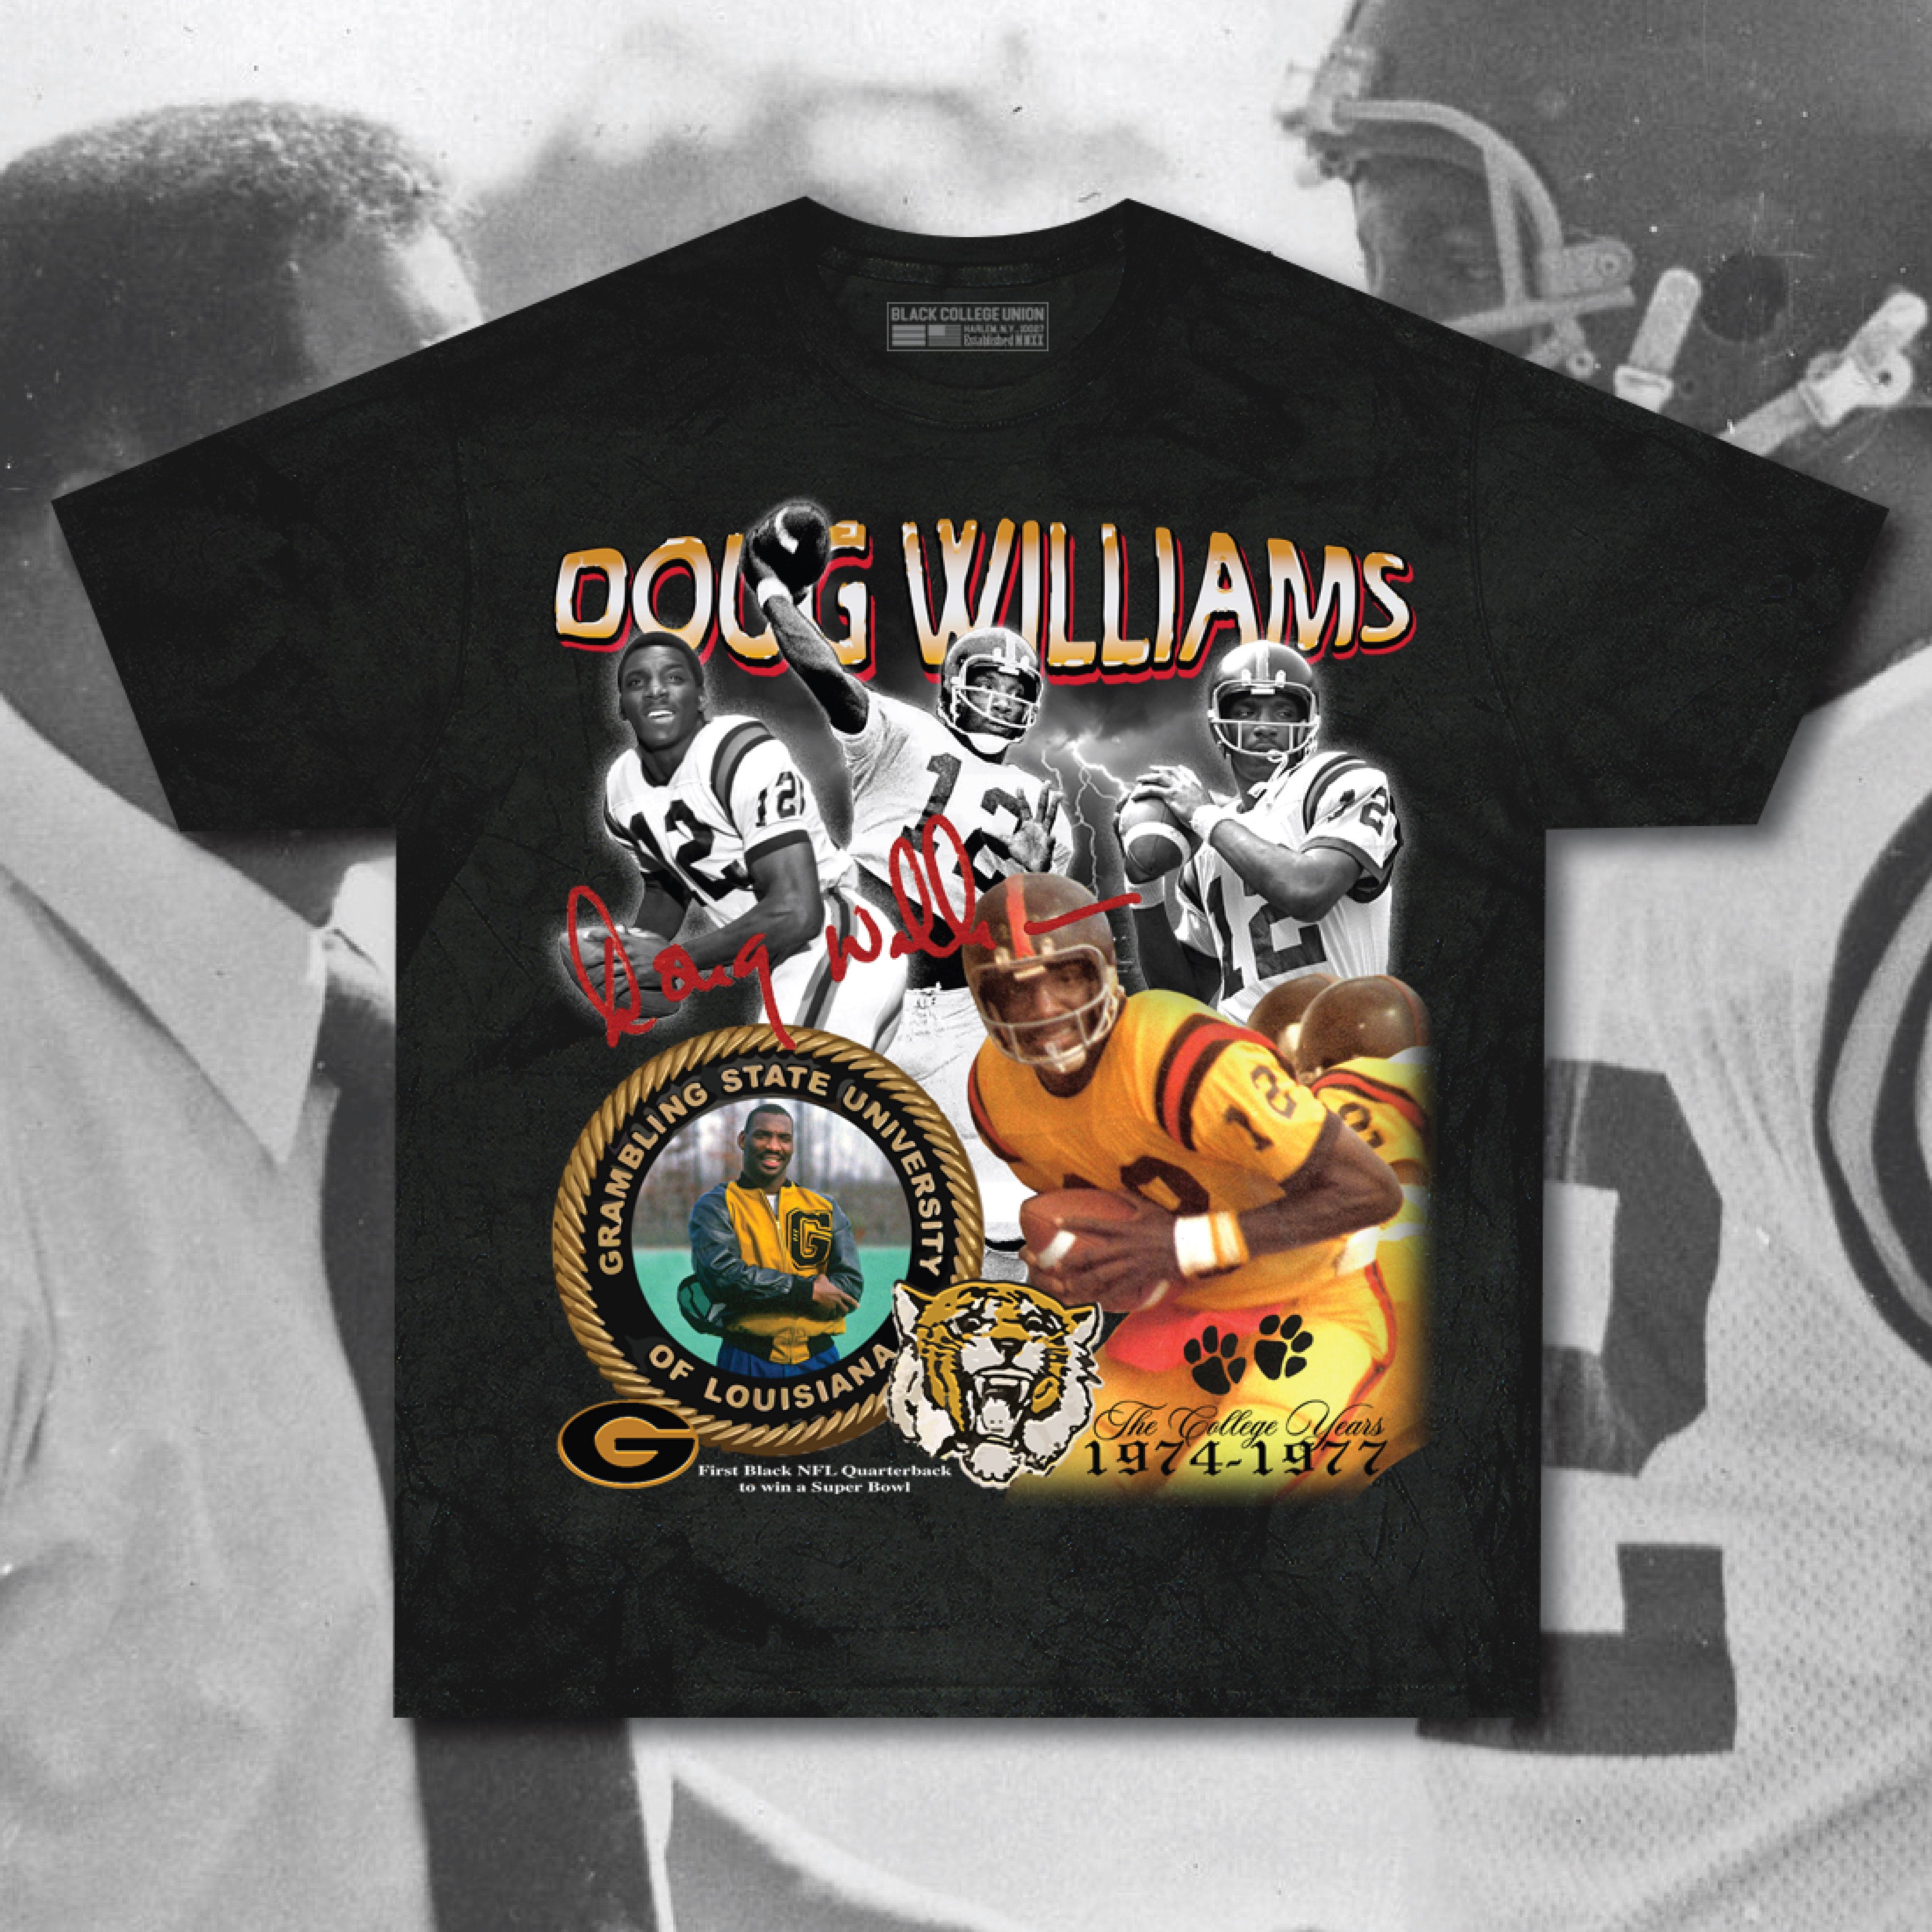 Doug Williams "The College Years" Homage Tee - Grambling State [GSU]